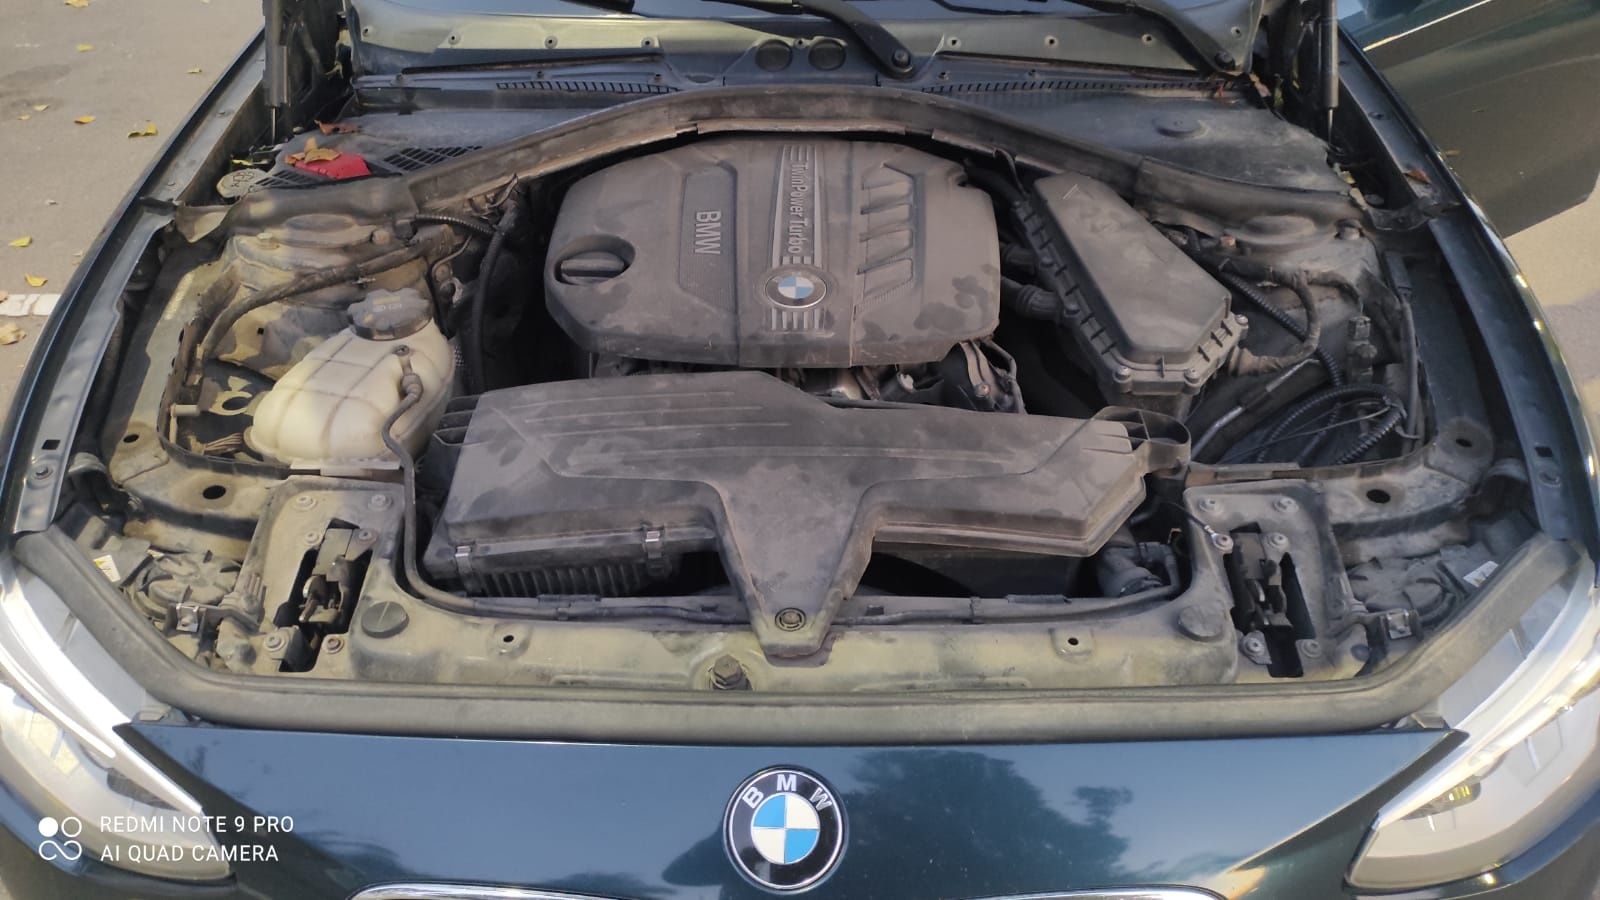 BMW 118d, 2014р. 2.0 дизель. Механіка.